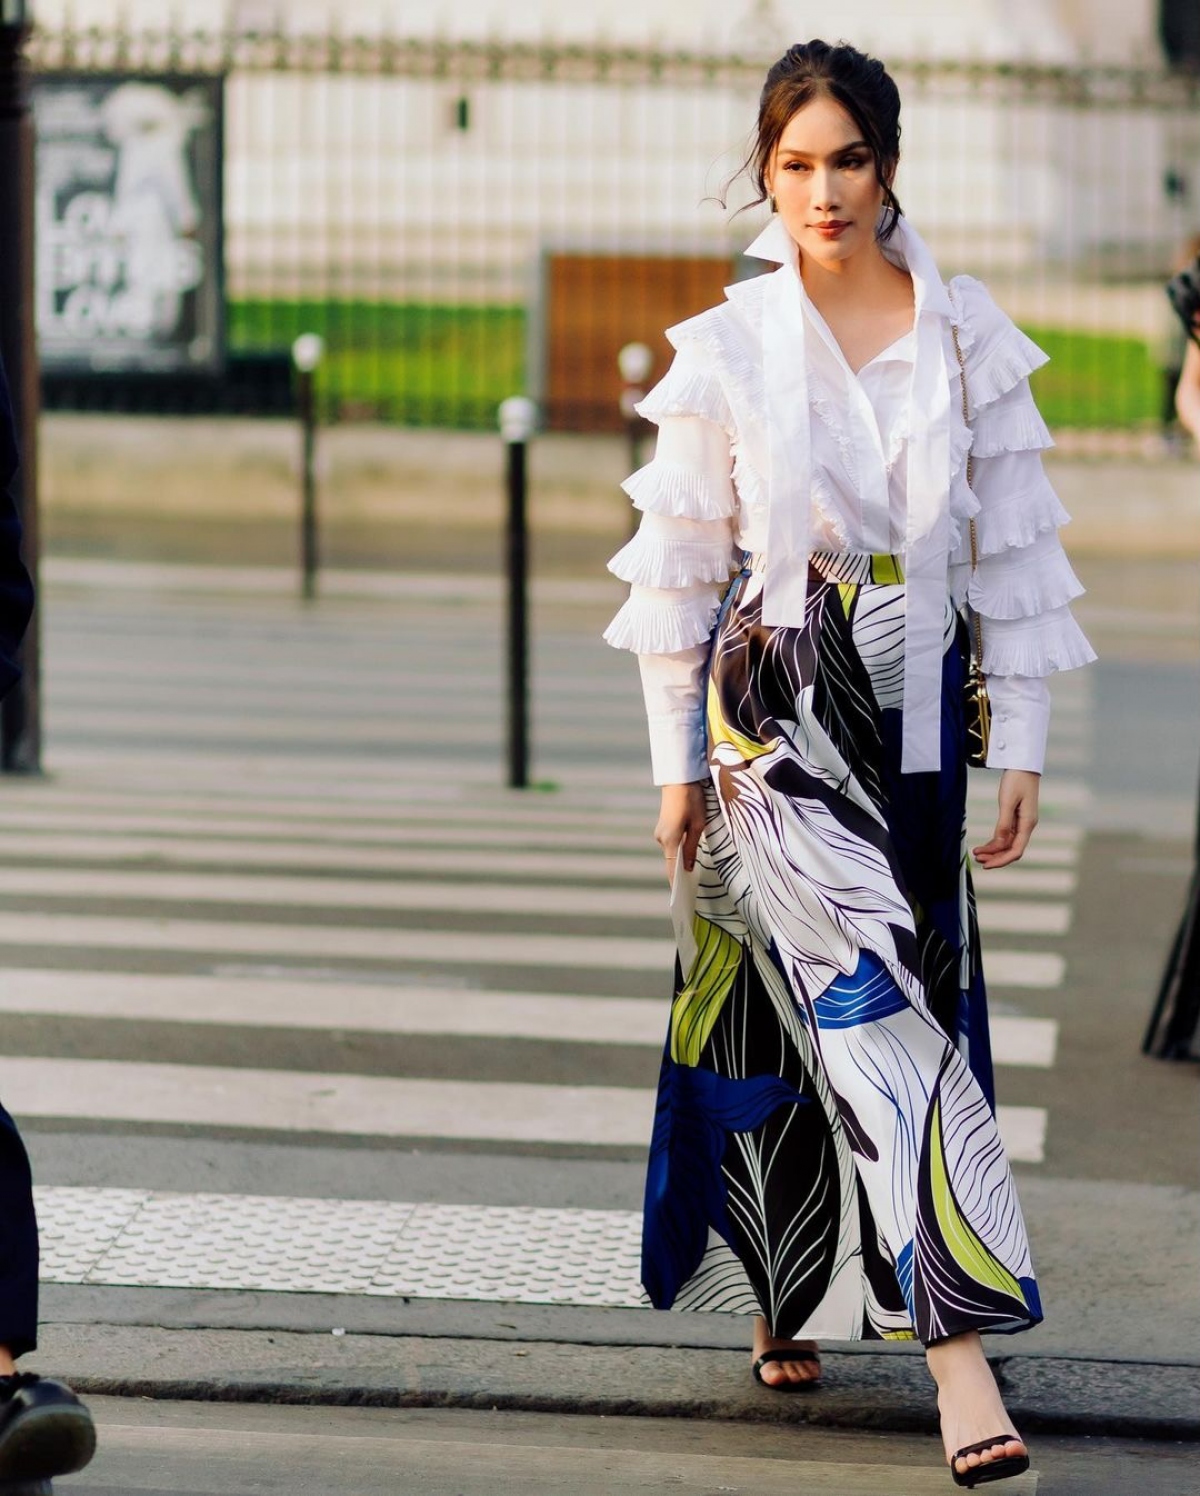 local celebrities shine at paris fashion week picture 4